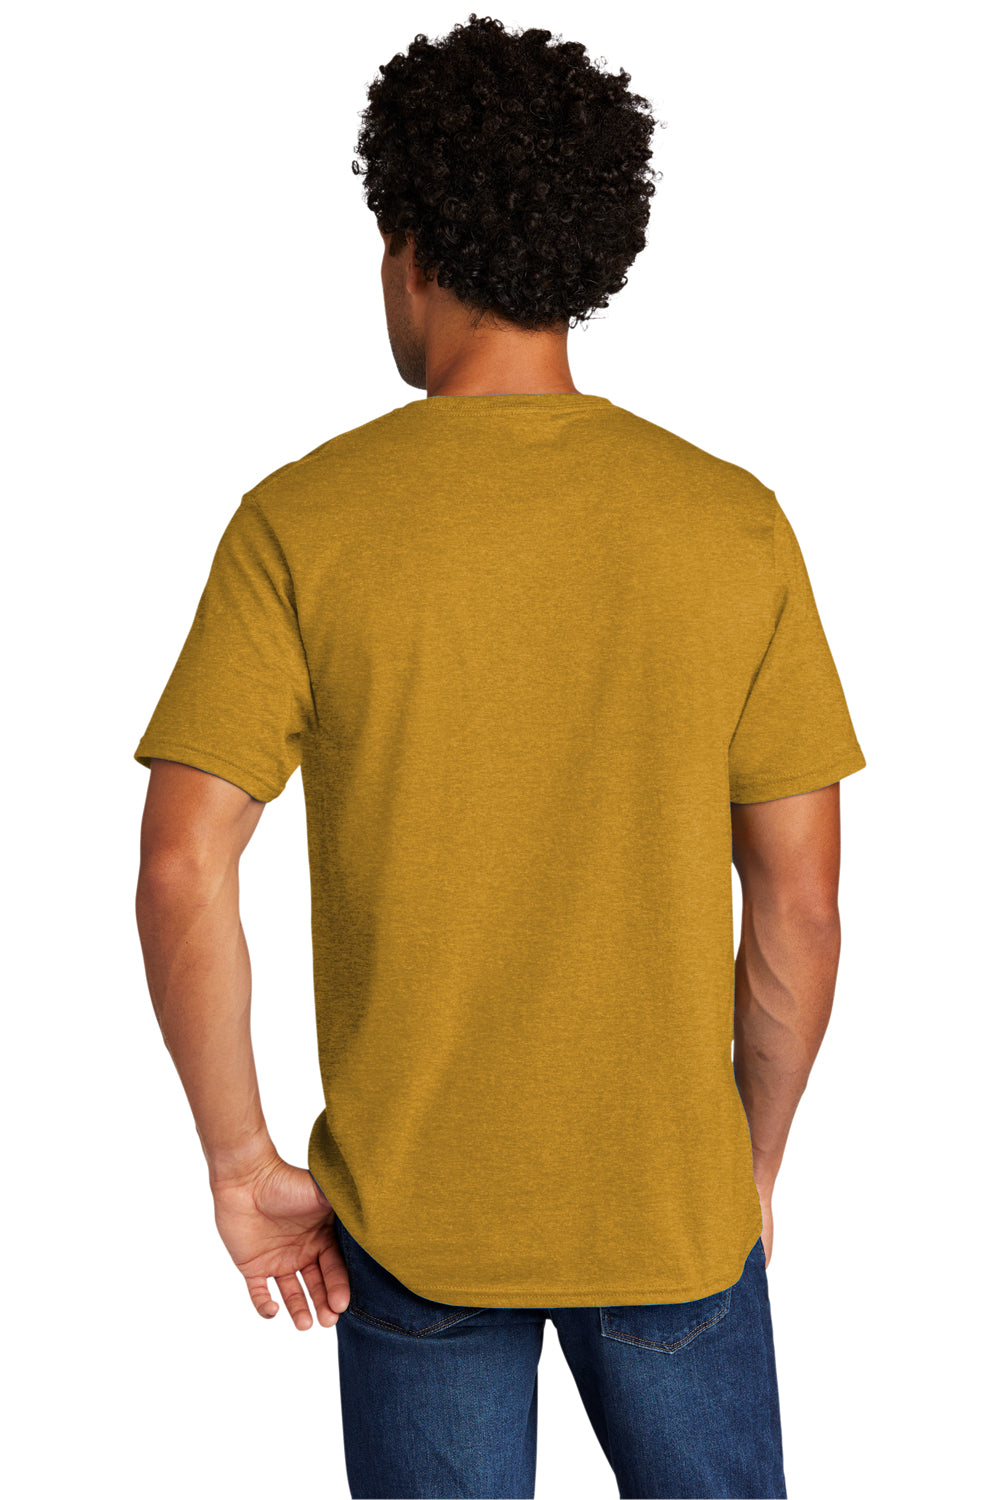 Port & Company Mens Short Sleeve Crewneck T-Shirt Heather Ochre Yellow Side